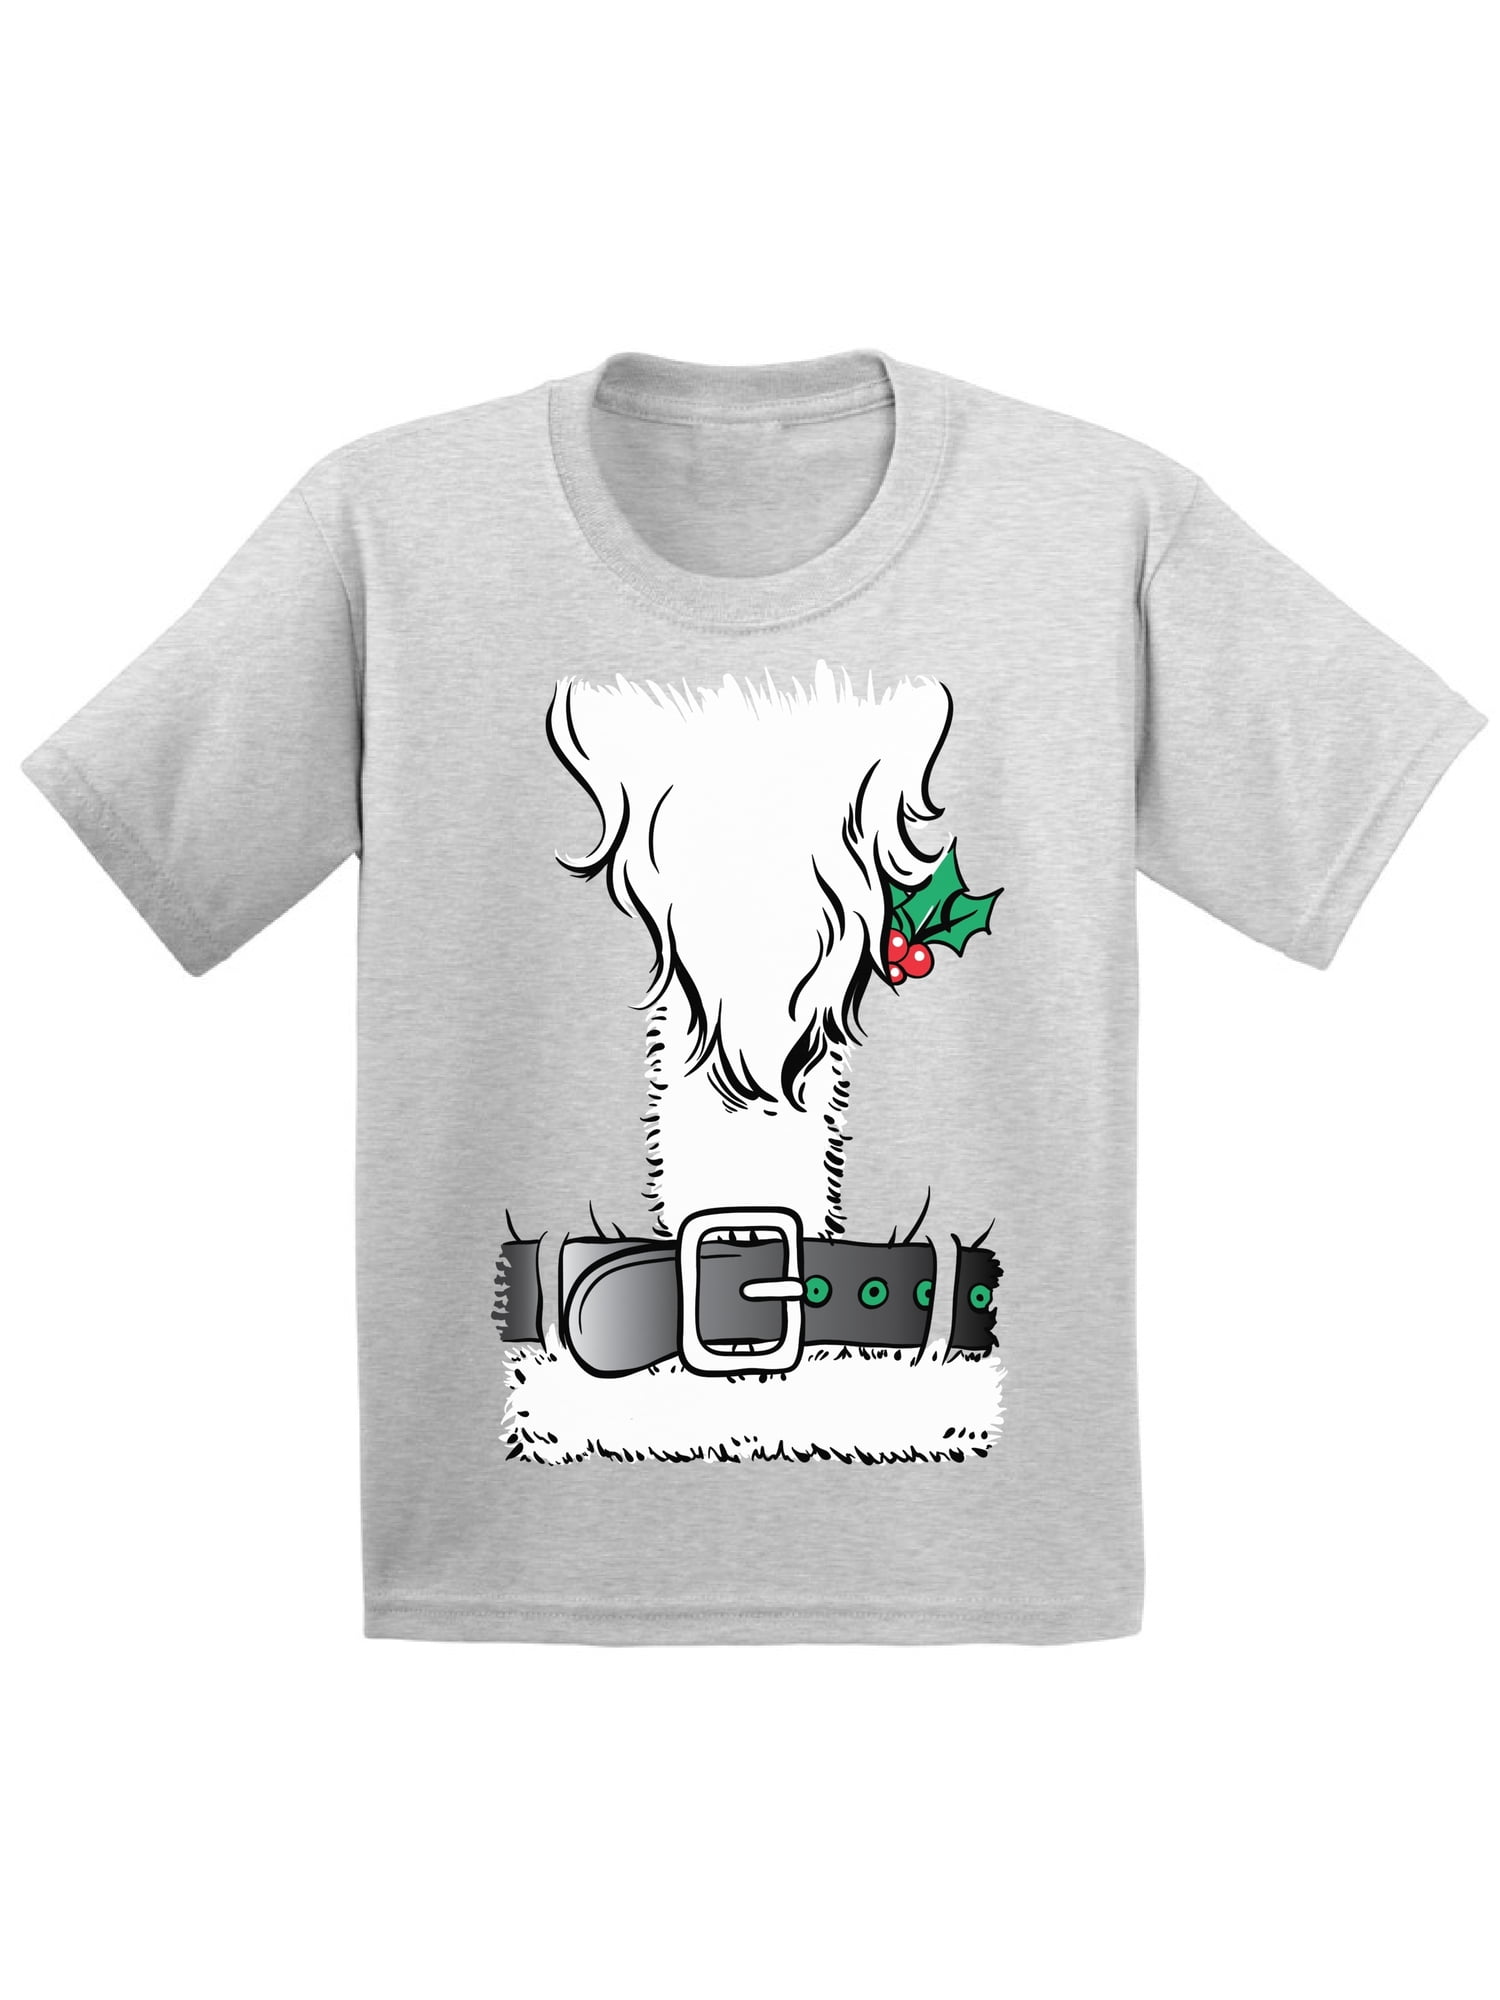 awkward-styles-santa-christmas-shirts-for-kids-santa-suit-funny-kid-s